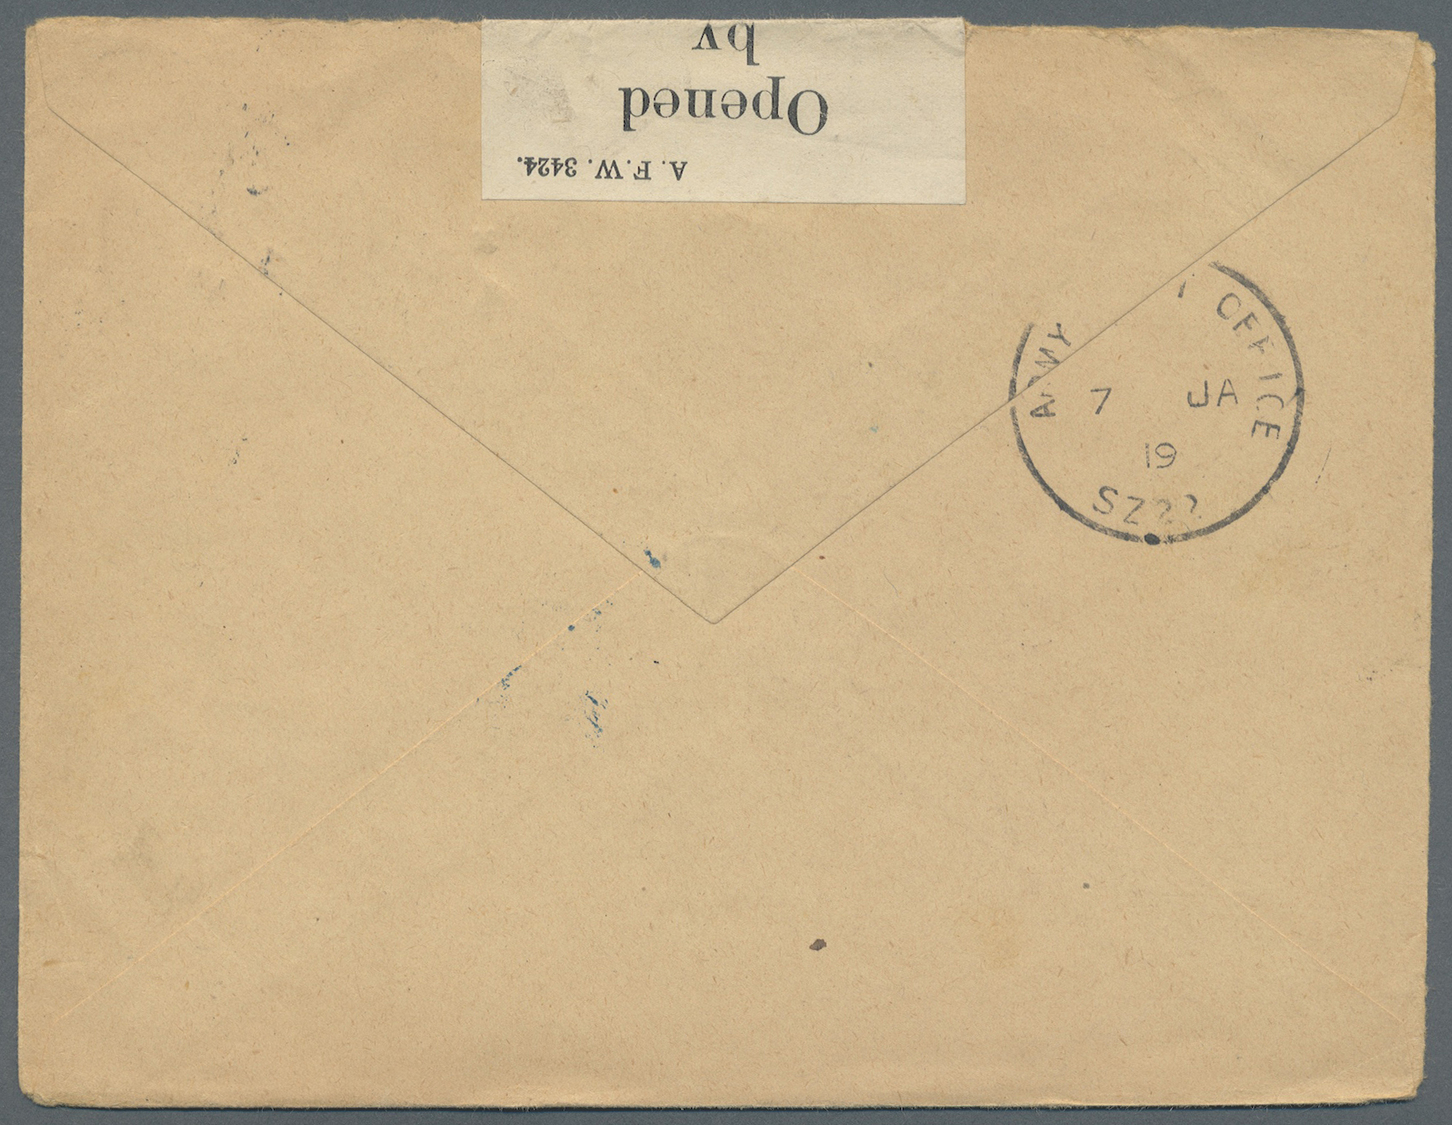 Br Palästina: 1919. Censored Envelope Addressed To Port Said Egypt Bearing Palestine SG 9, 5m Orange (2) Tied By 'O.E.T. - Palestine